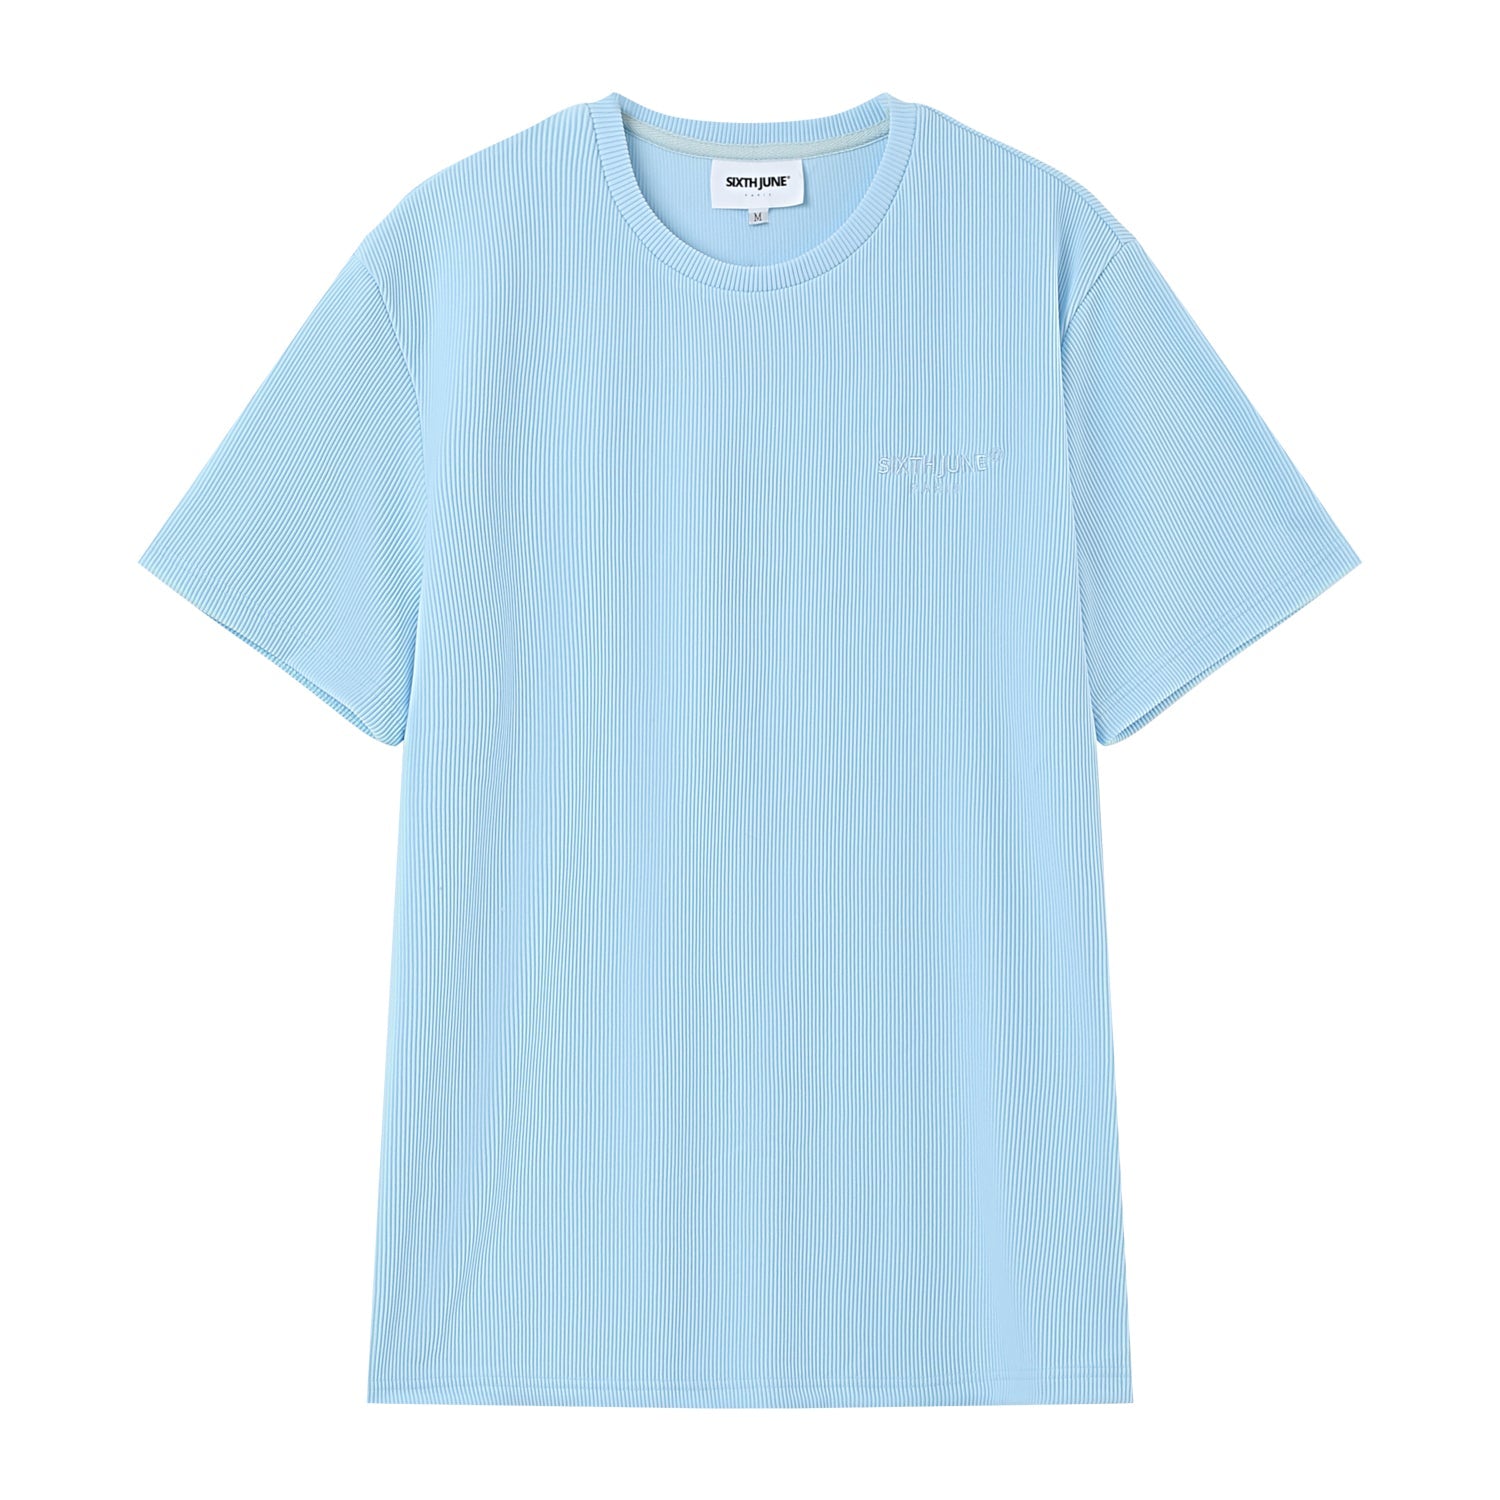 Pleated short sleeves t-shirt light Blue